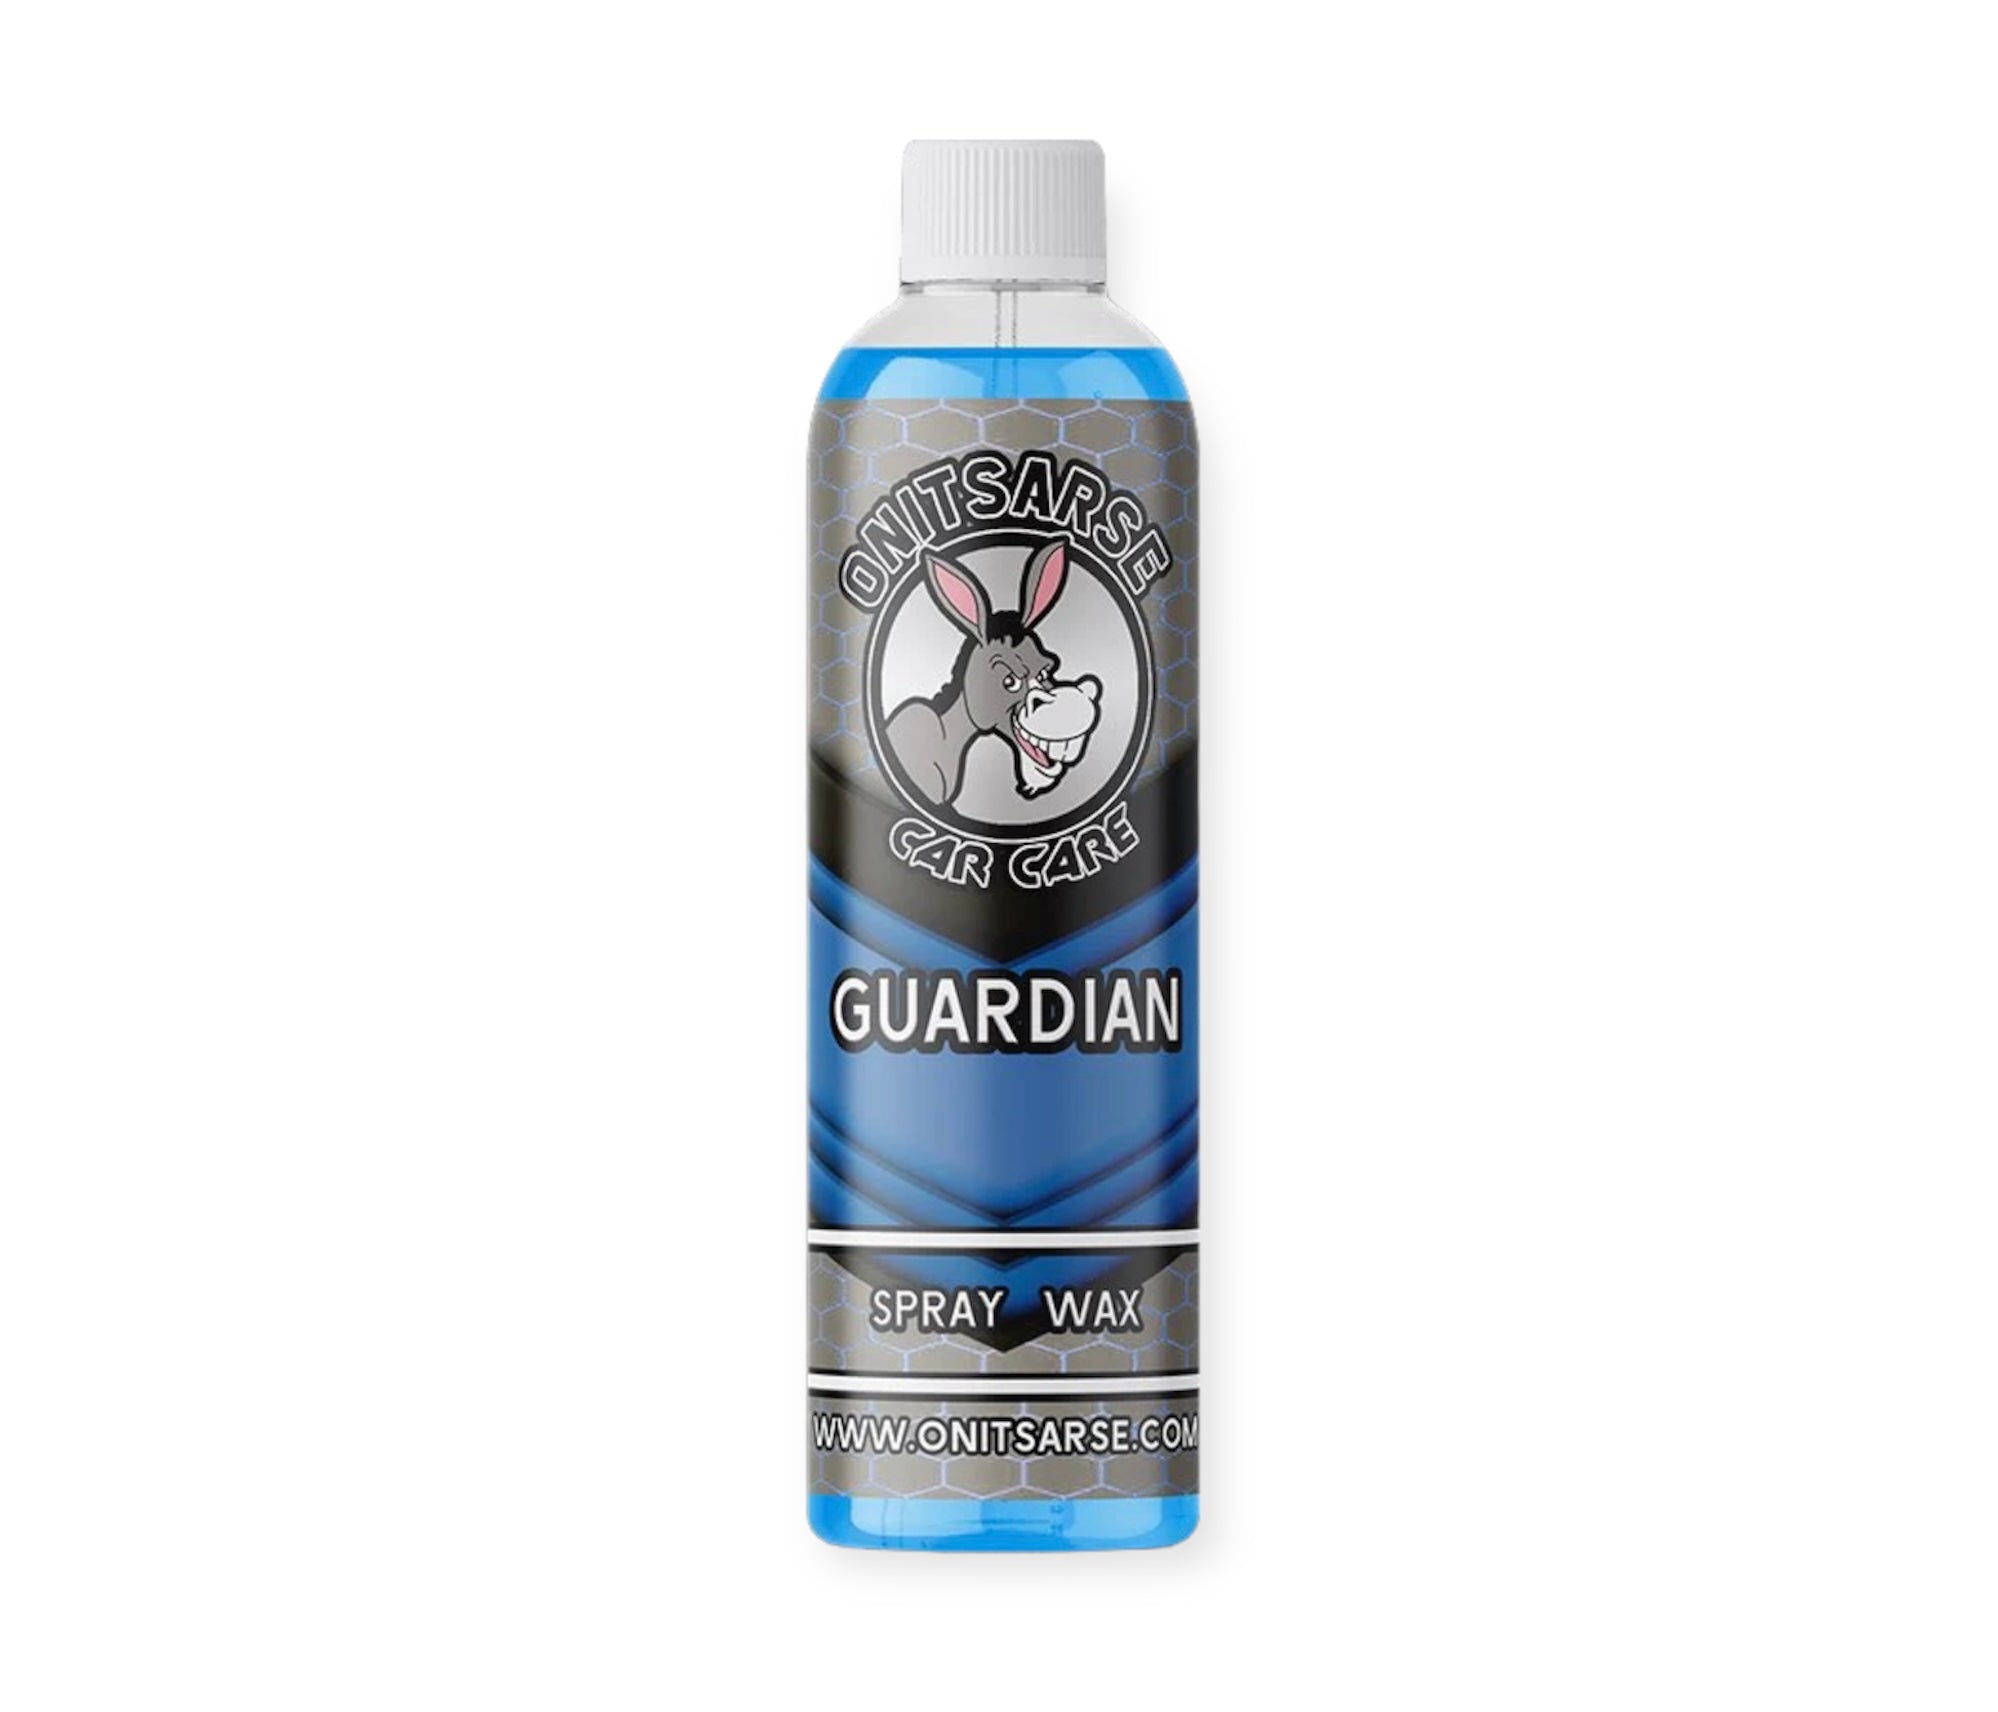 Guardian (Spray Wax)